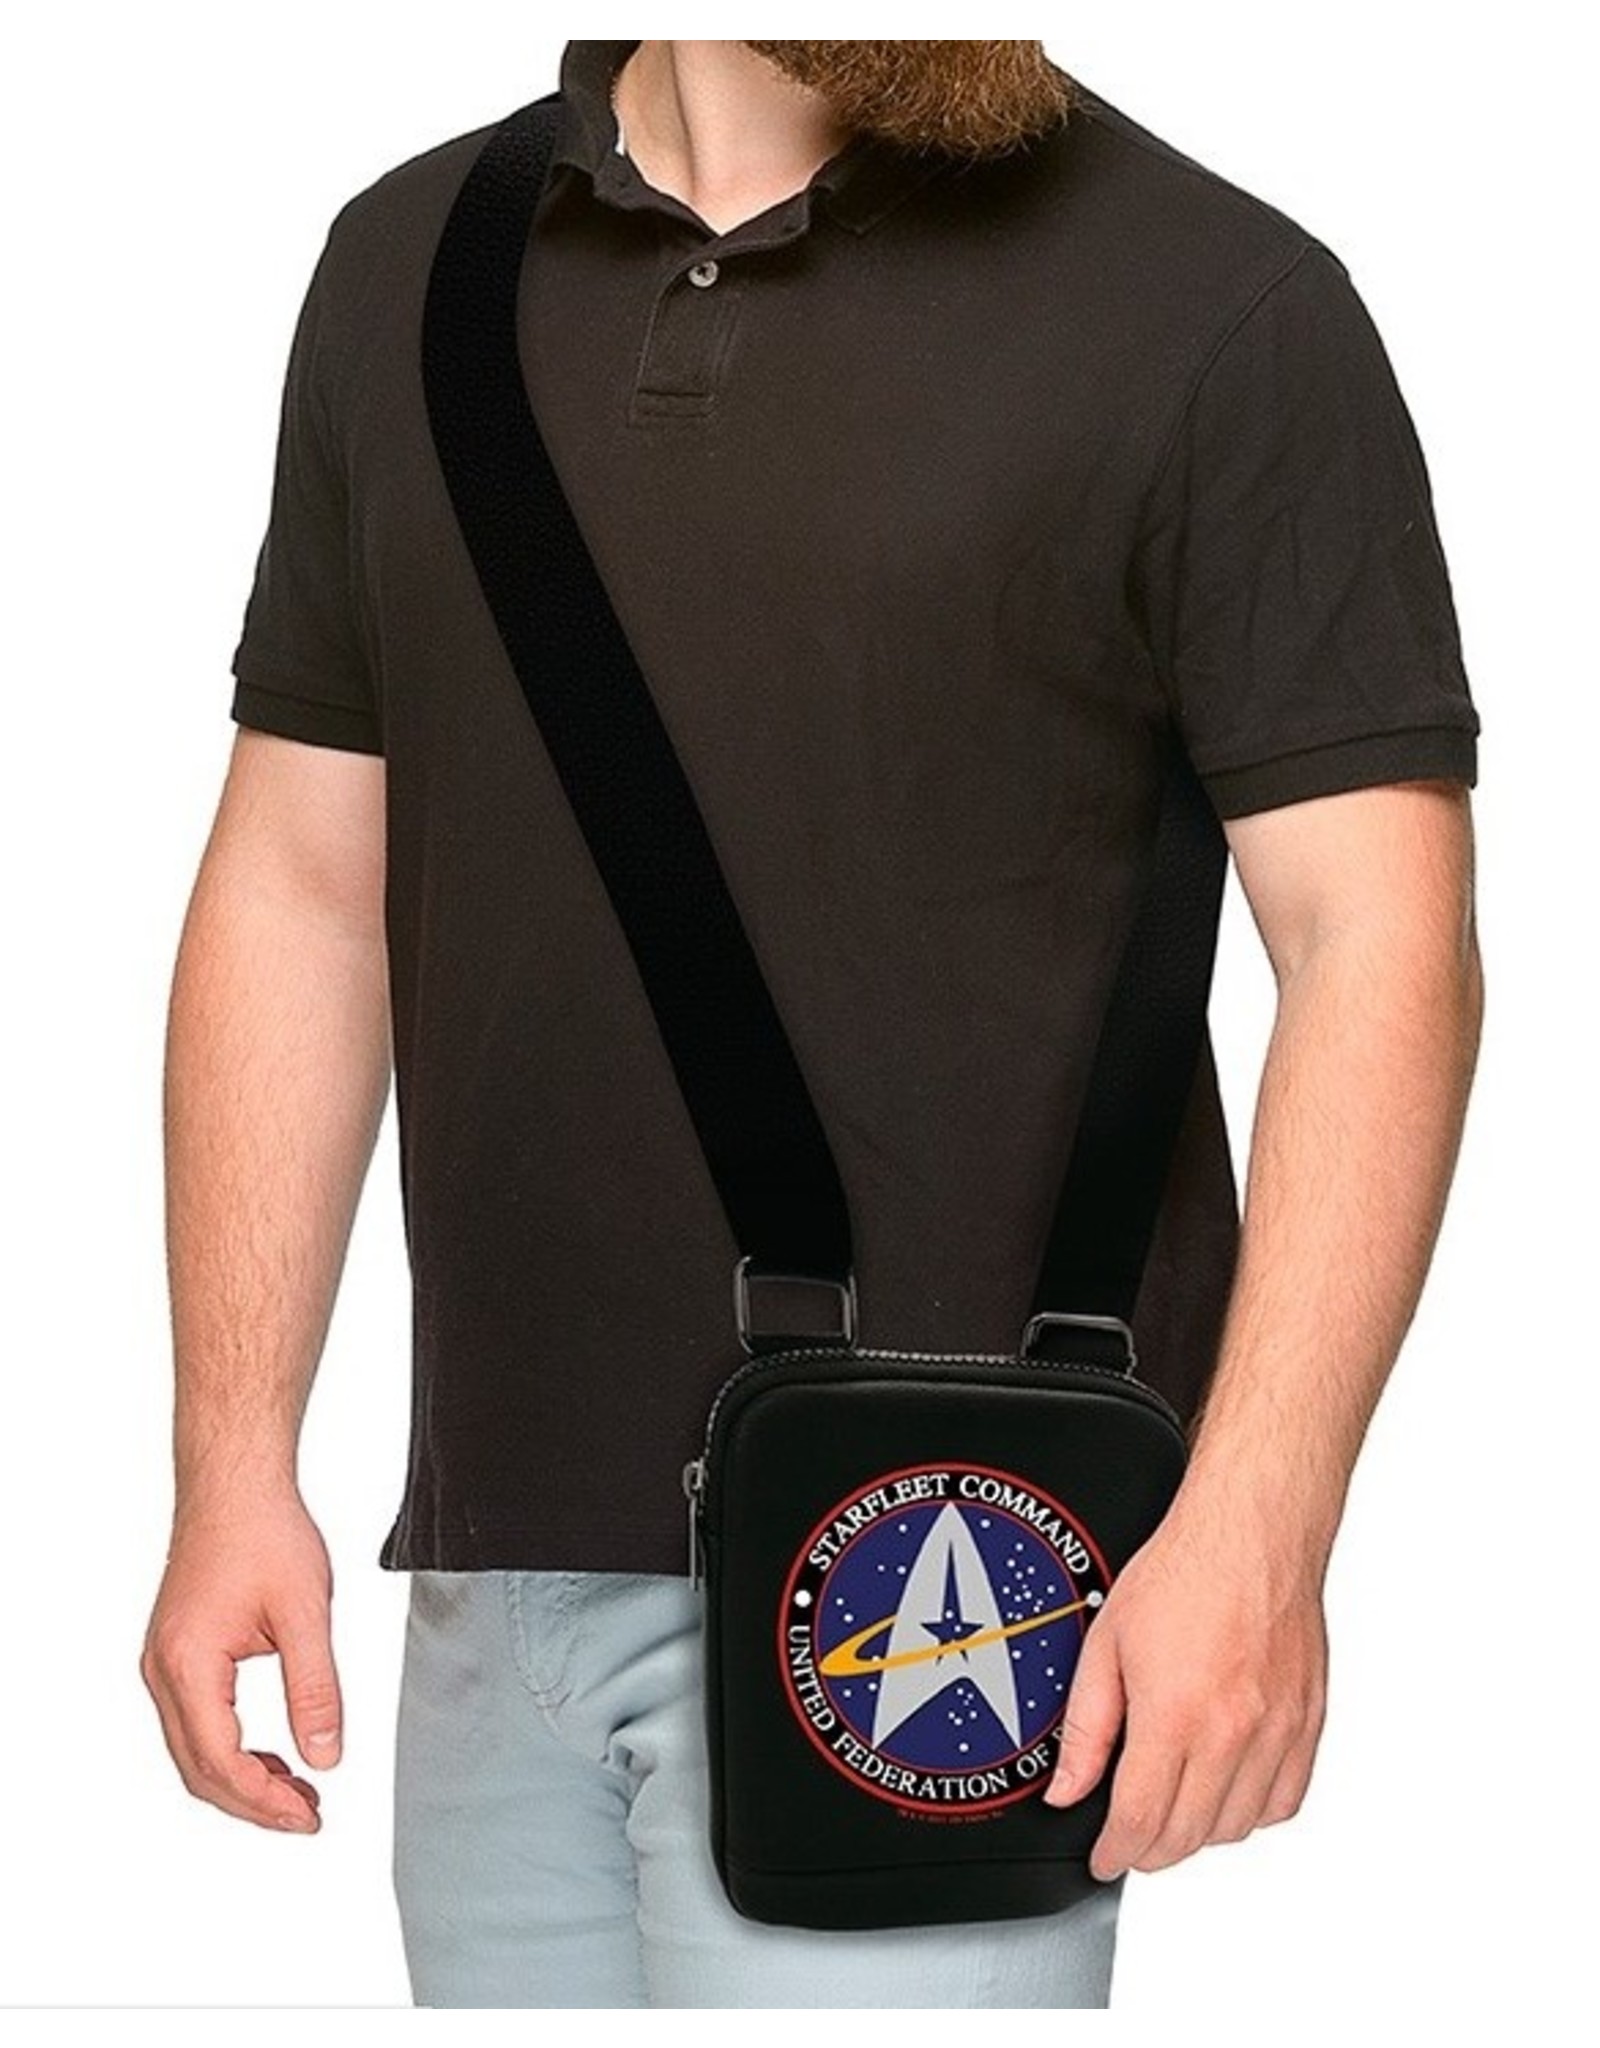 abysse corp Merchandise bags - STAR TREK shoulder Bag Starfleet